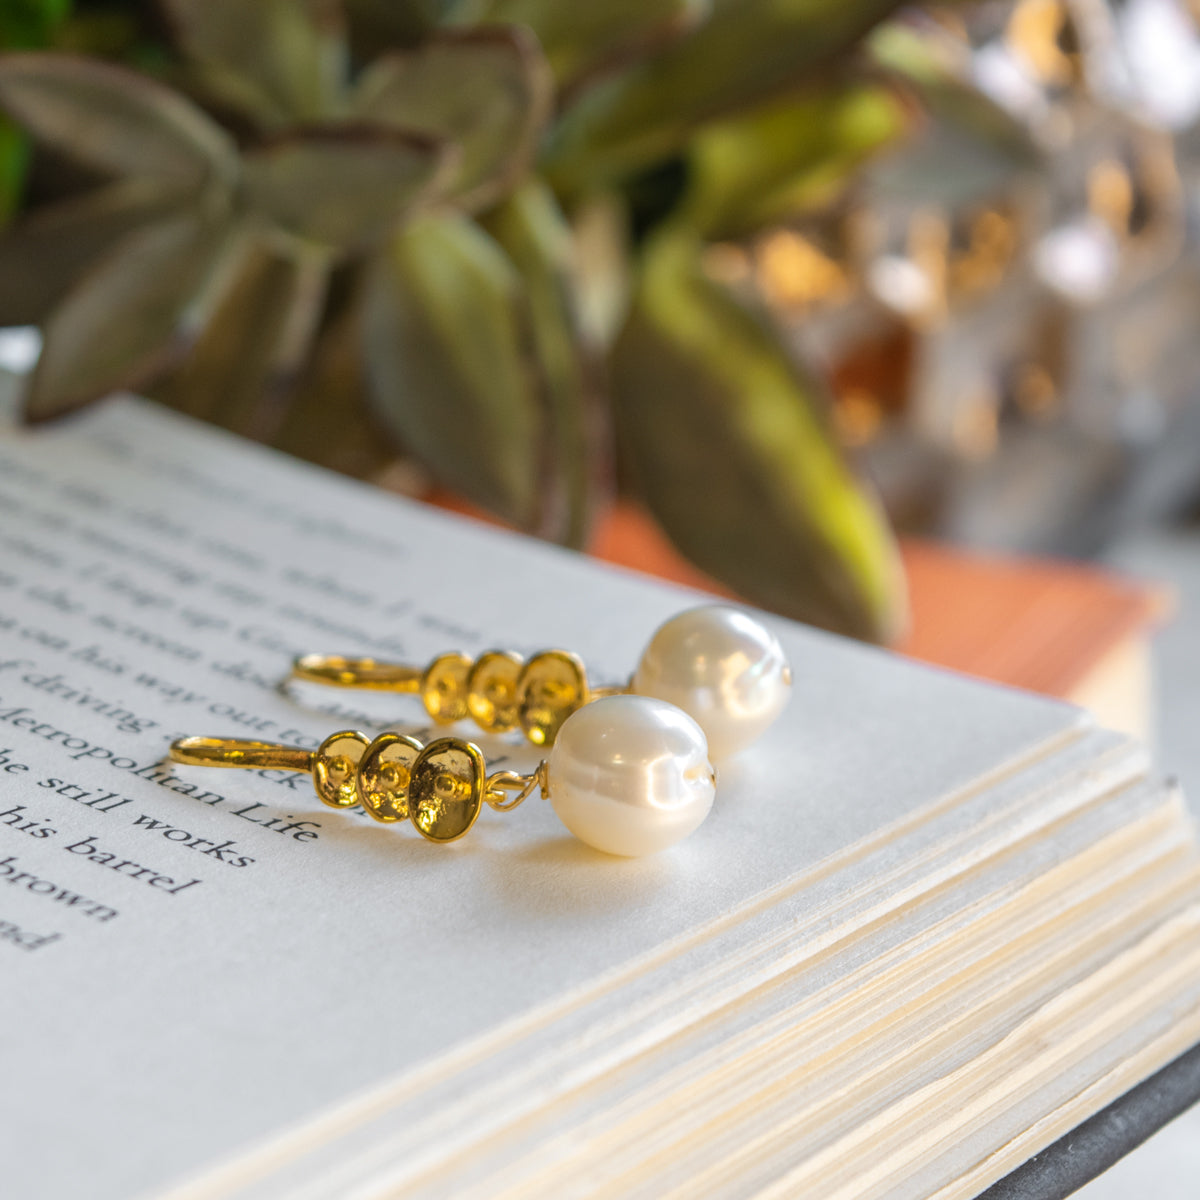 18KT Gold Vermeil & Freshwater Pearl Earrings